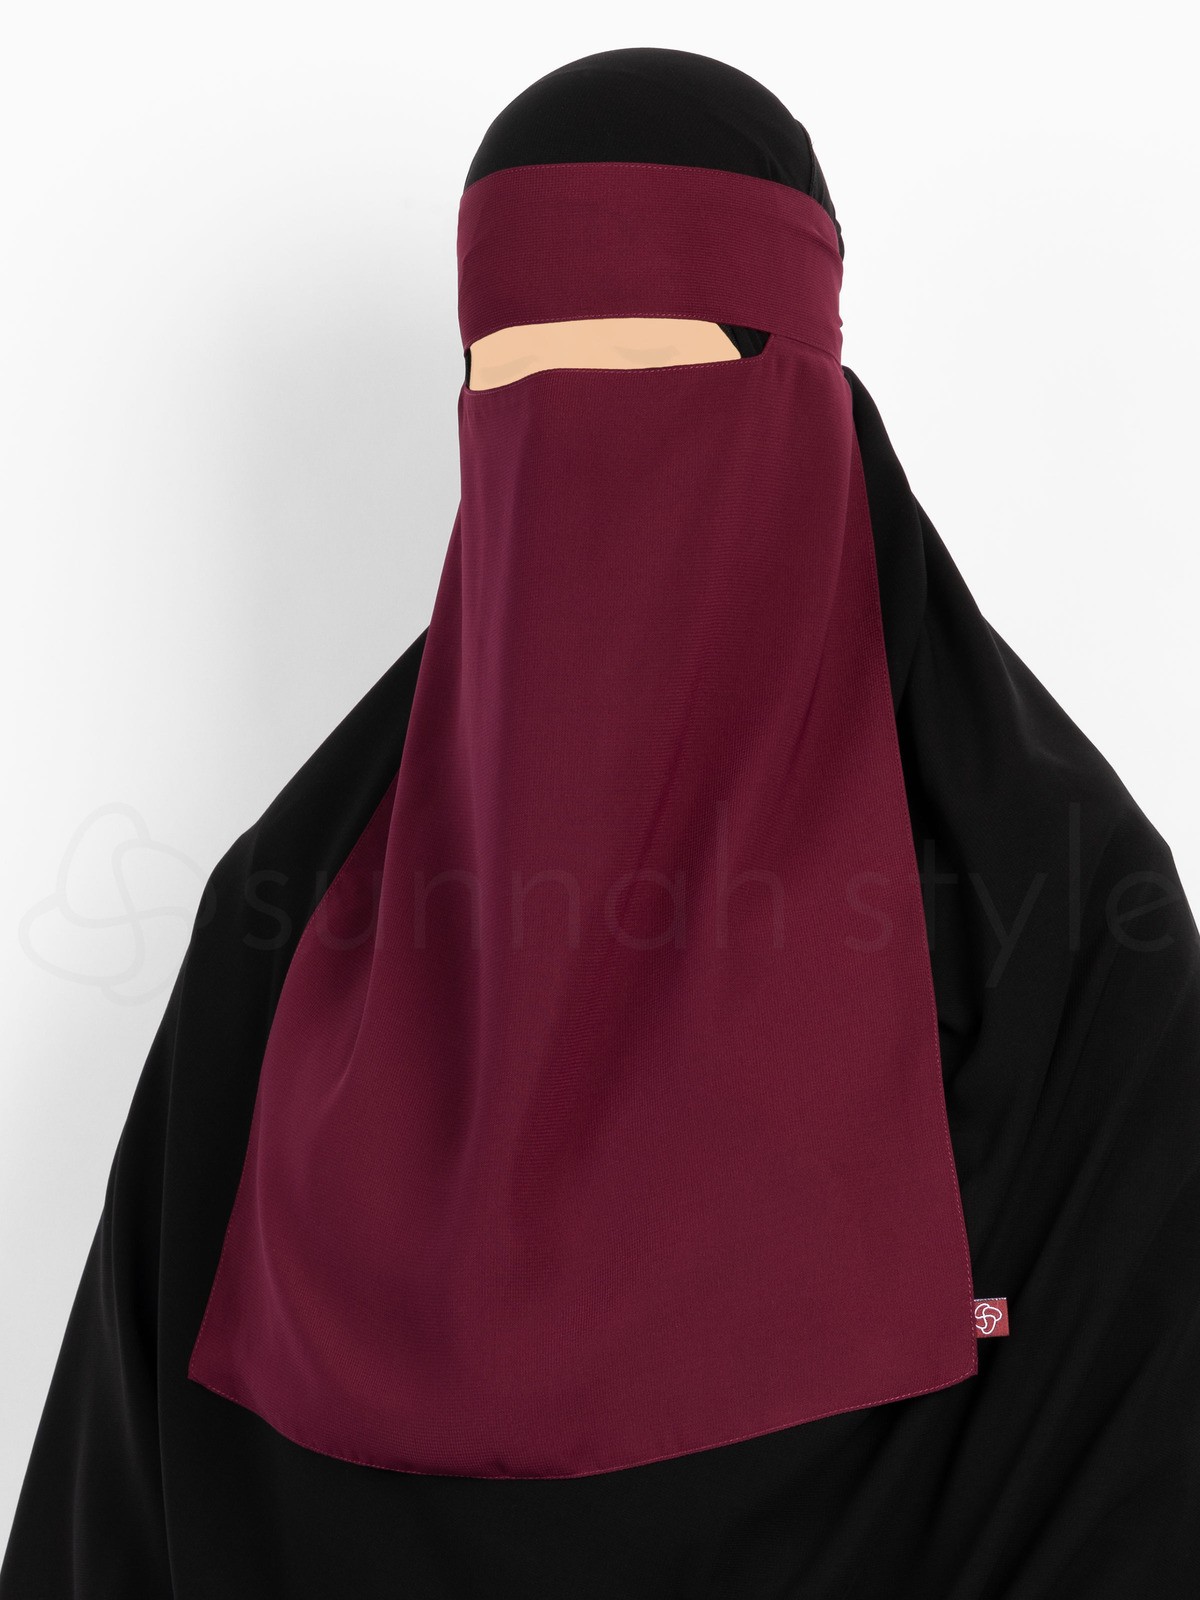 Sunnah Style - Narrow No-Pinch One Layer Niqab (Twilight Mauve)